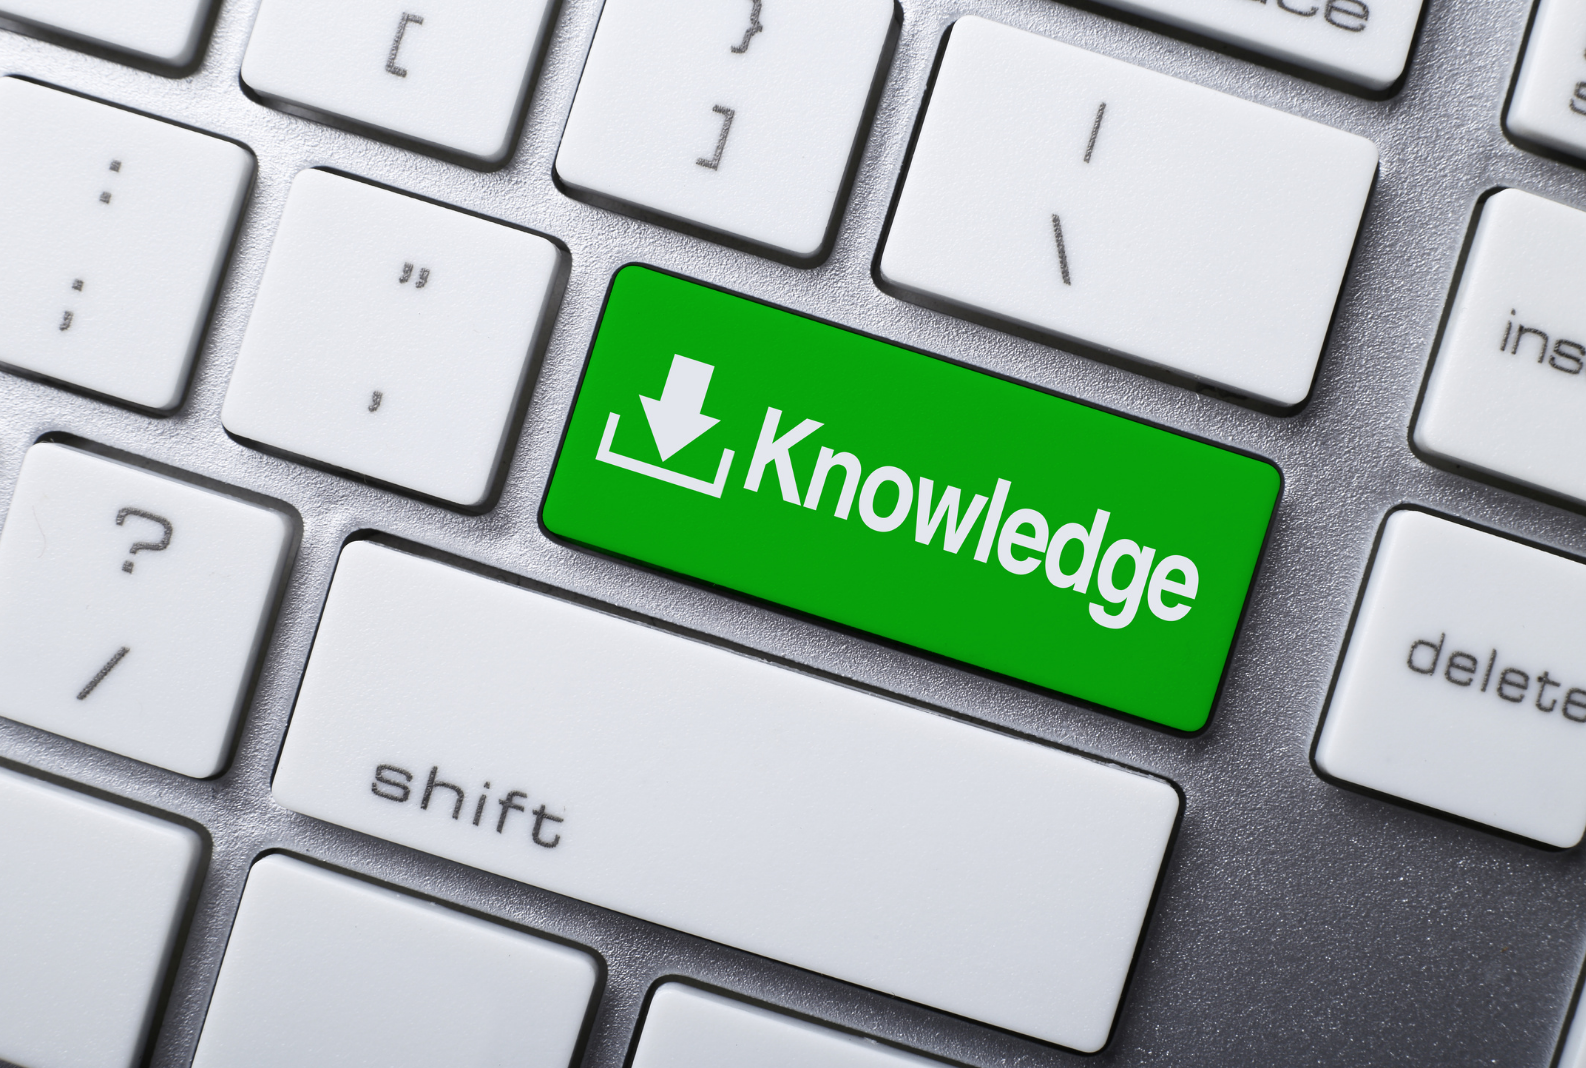 Green key reading 'Knowledge' on computer keyboard